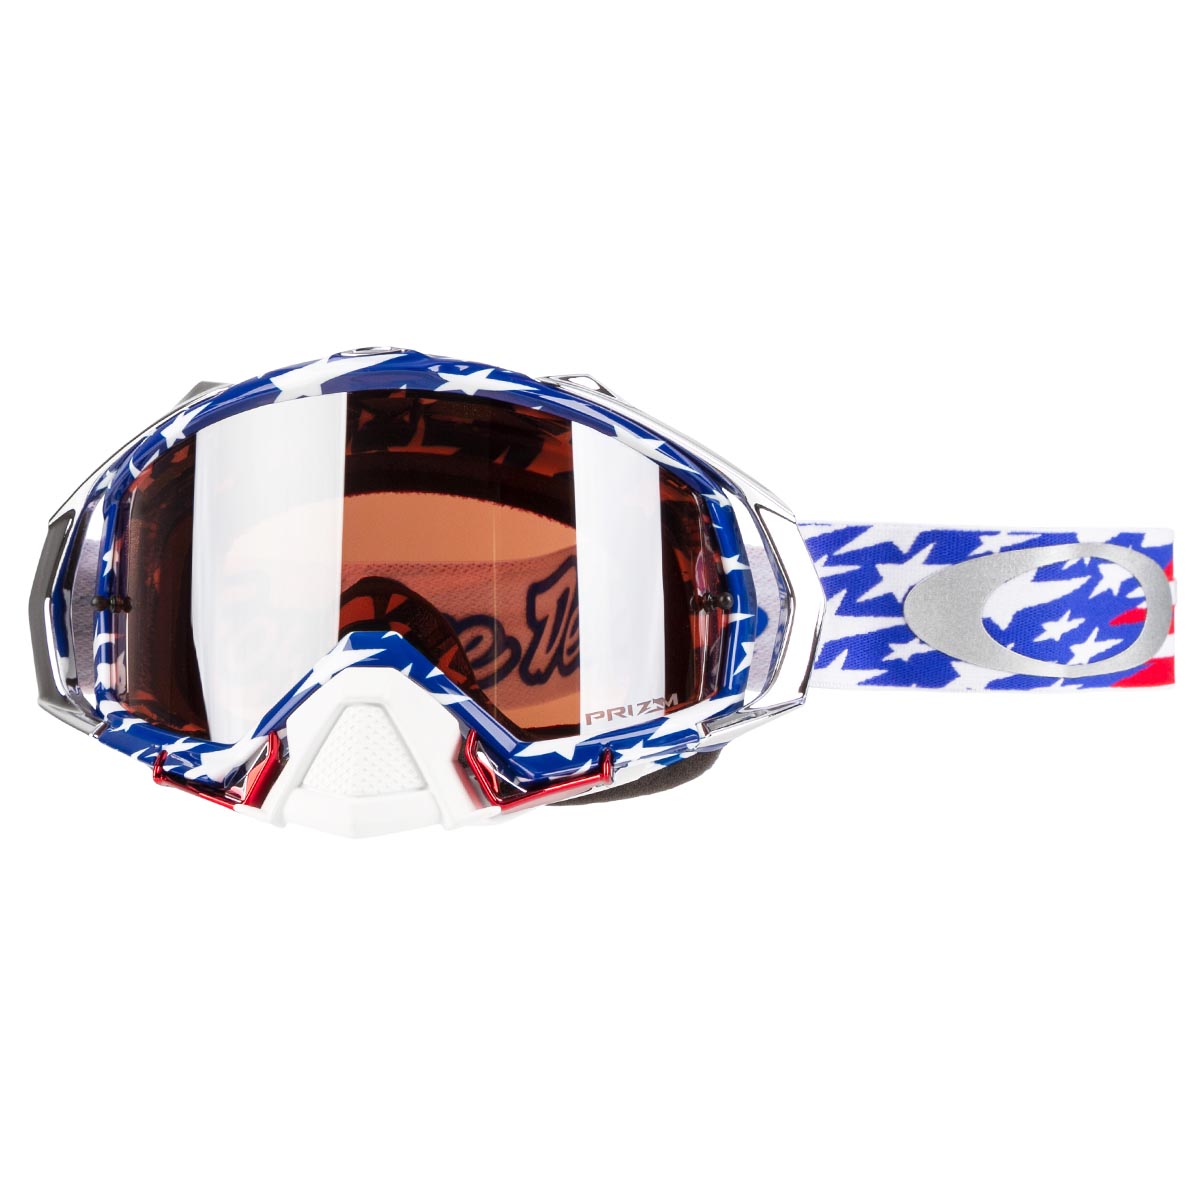 Oakley Goggle Mayhem Pro MX Troy Lee Designs: Glory Red/White/Blue - Prizm MX Black Anti-Fog